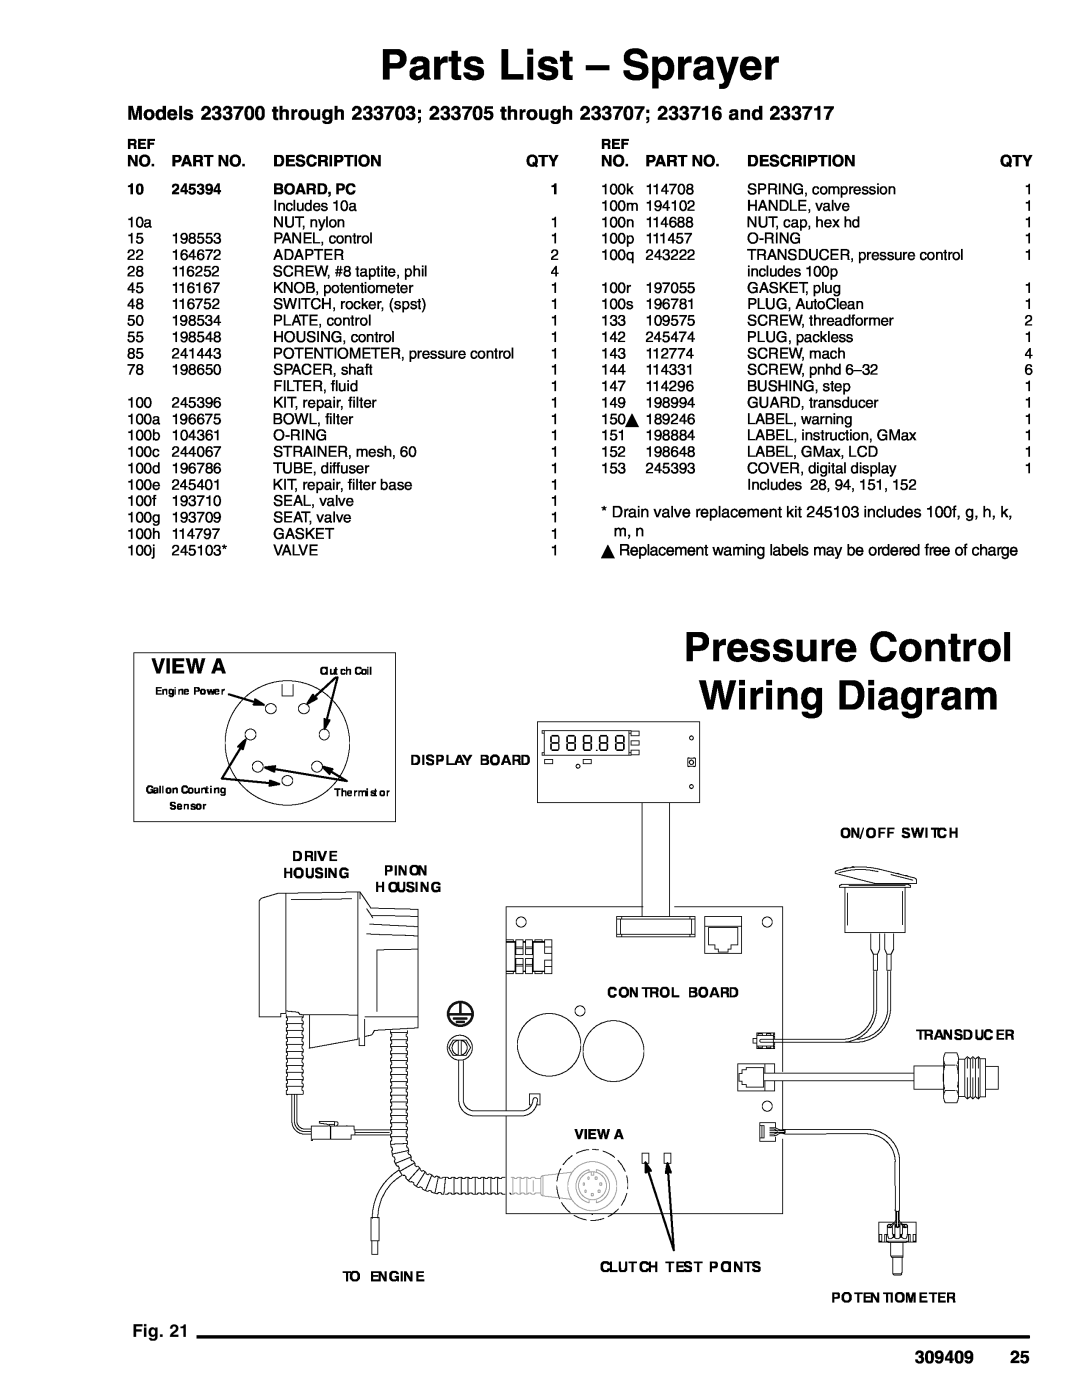 Graco Inc 233703, 233702, 233701, 233700 Parts List - Sprayer, Pressure Control Wiring Diagram, View A, 309409, Description 